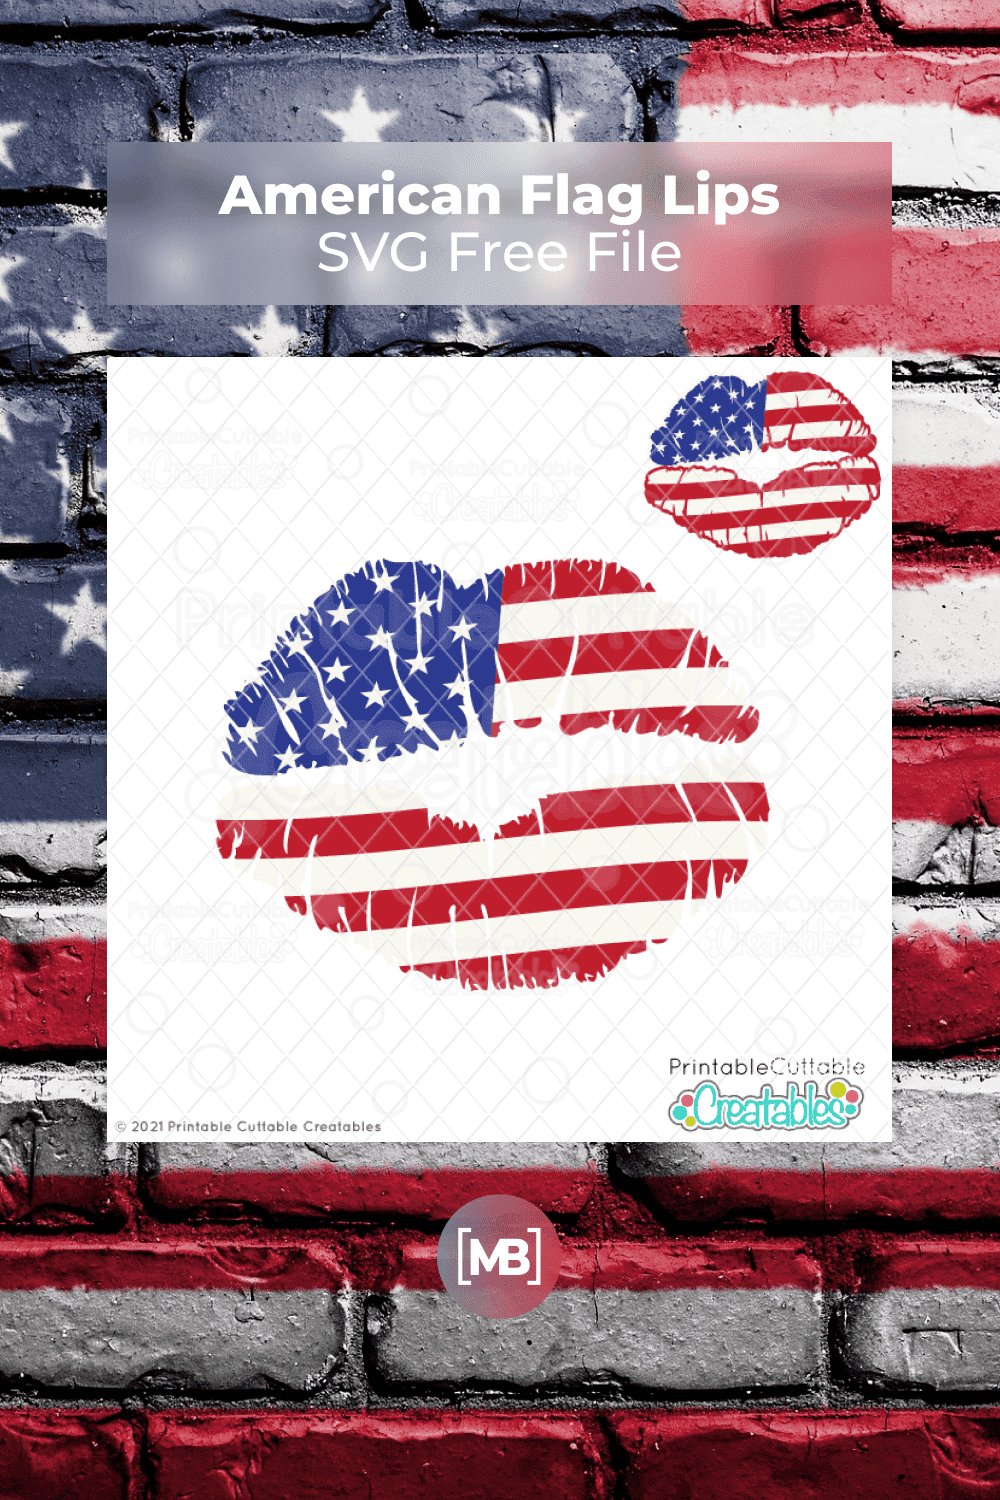 American Flag Lips SVG Free File.